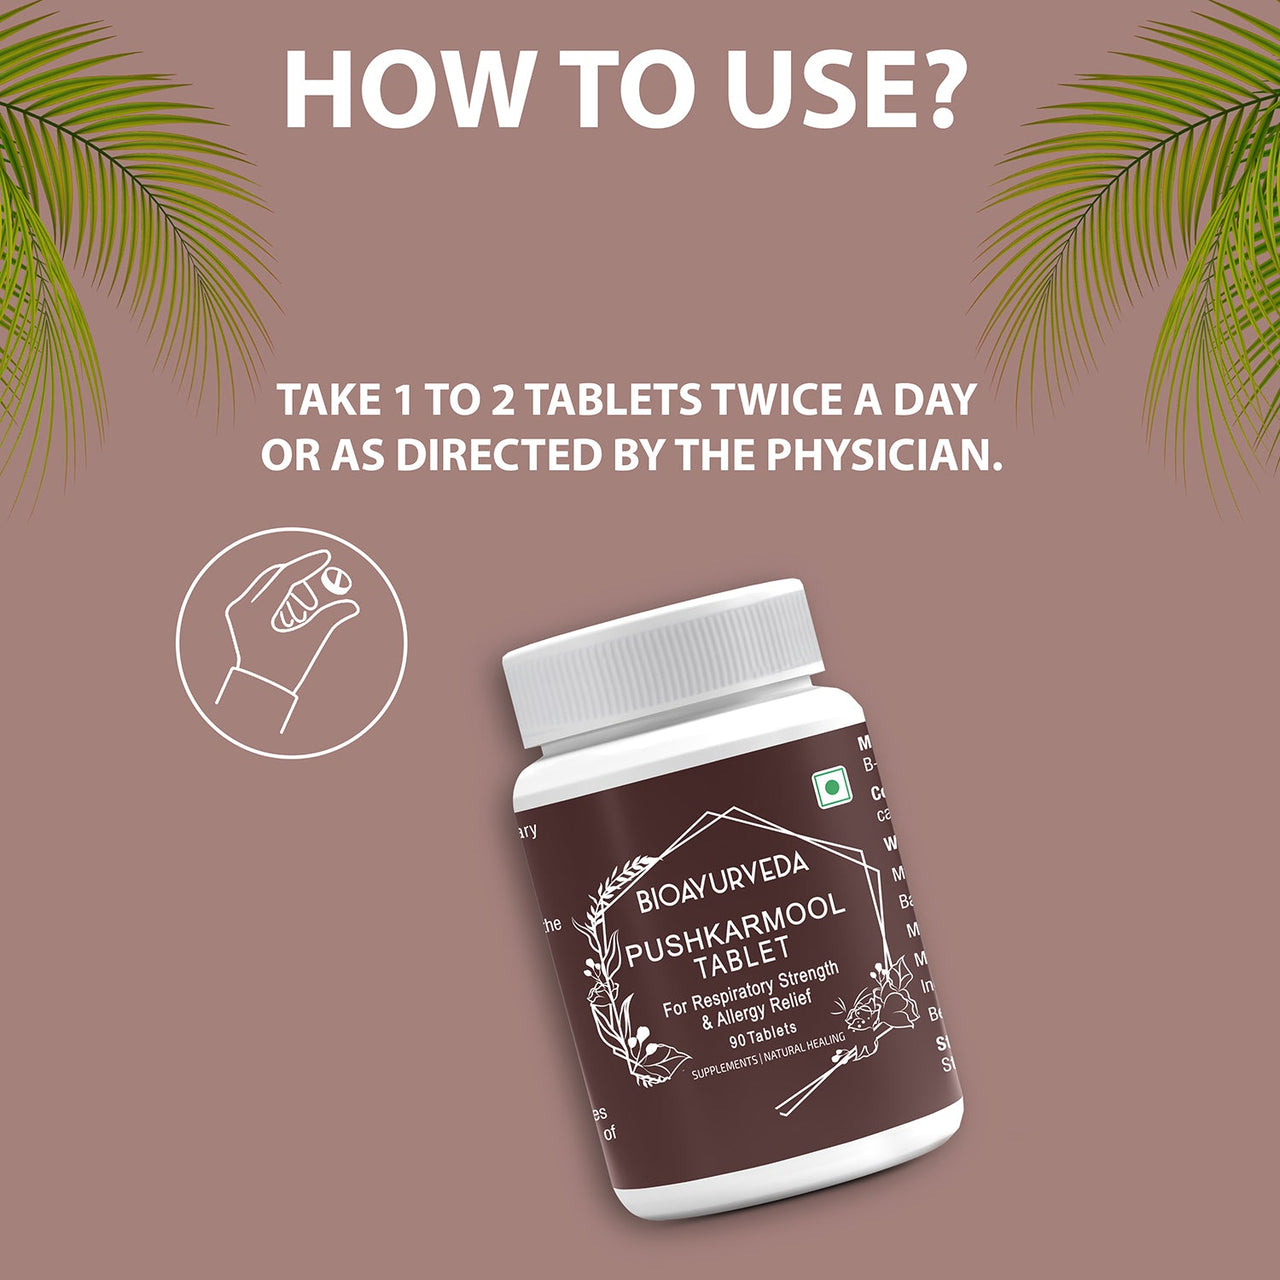 How to Use Pushkarmool Tablet 90